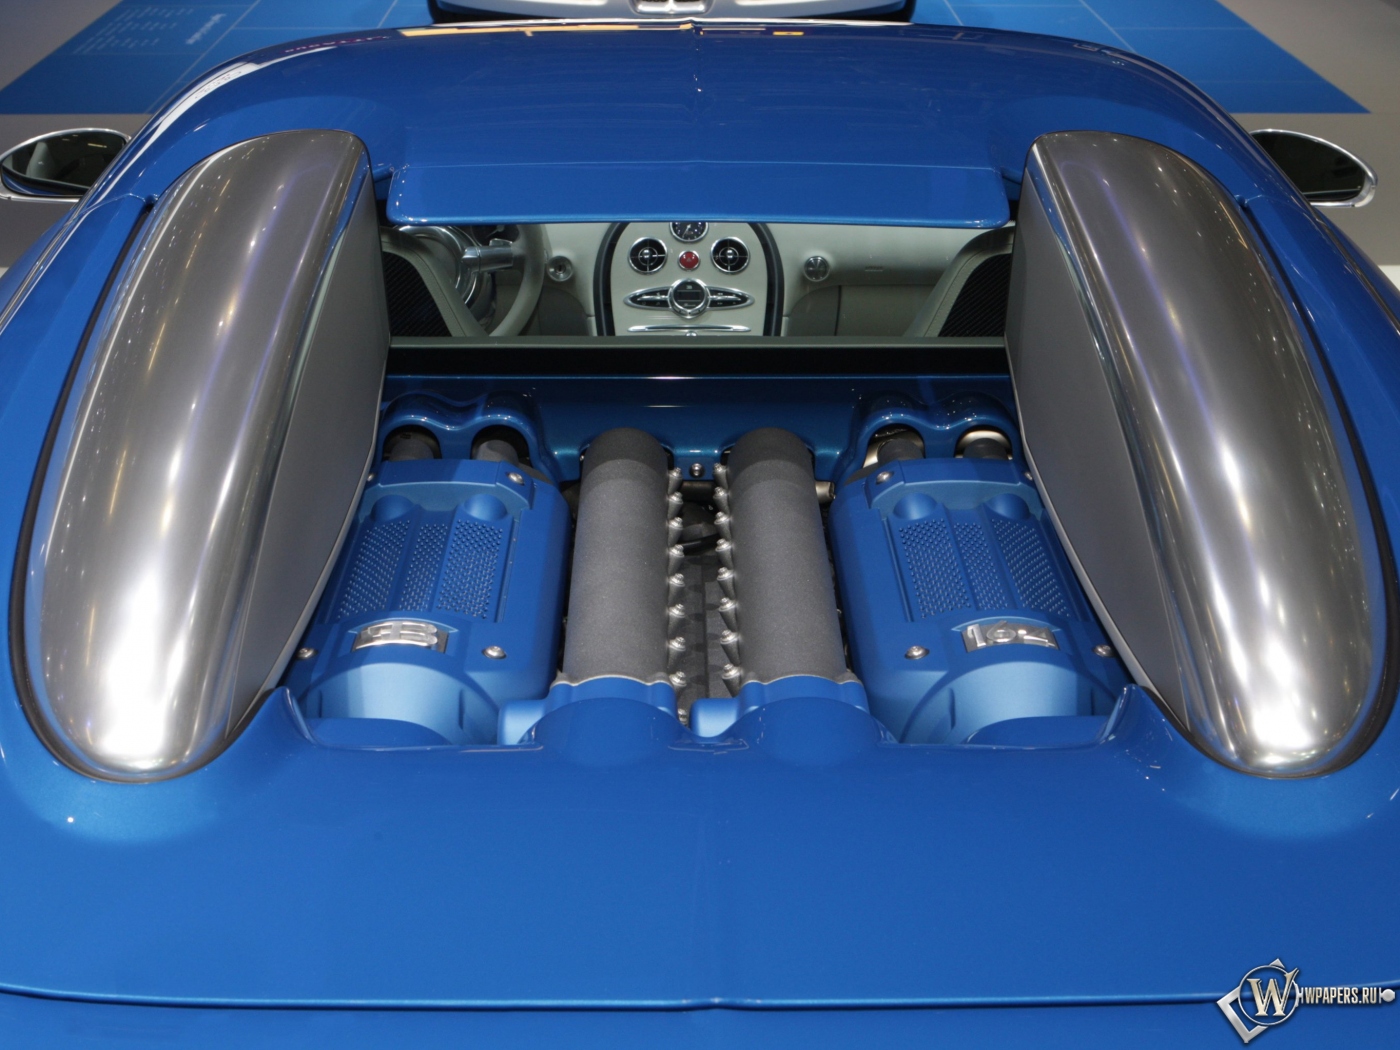 Bugatti Veyron Bleu Centenaire (2009) 1400x1050